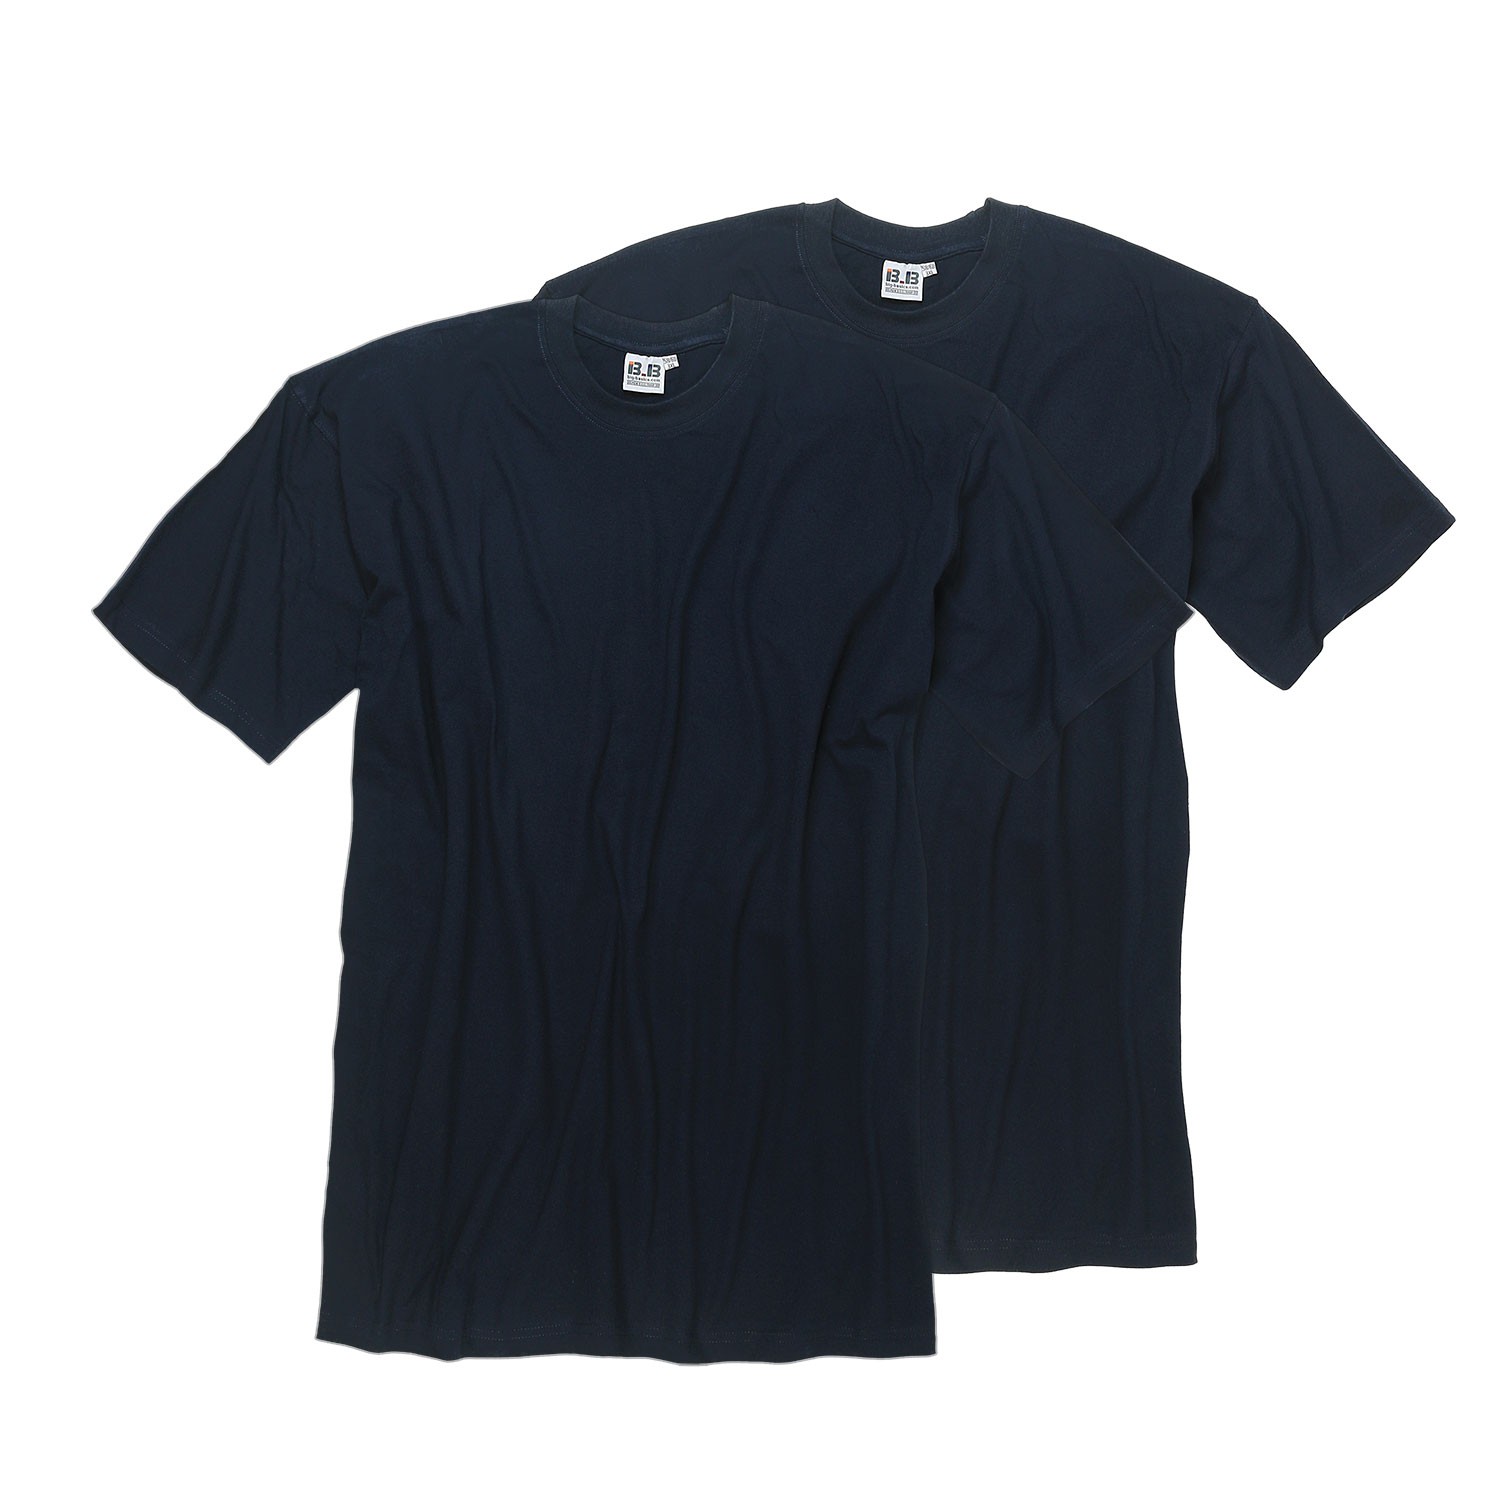 Blue double pack t-shirt by BigBasics up to kingsize 8XL